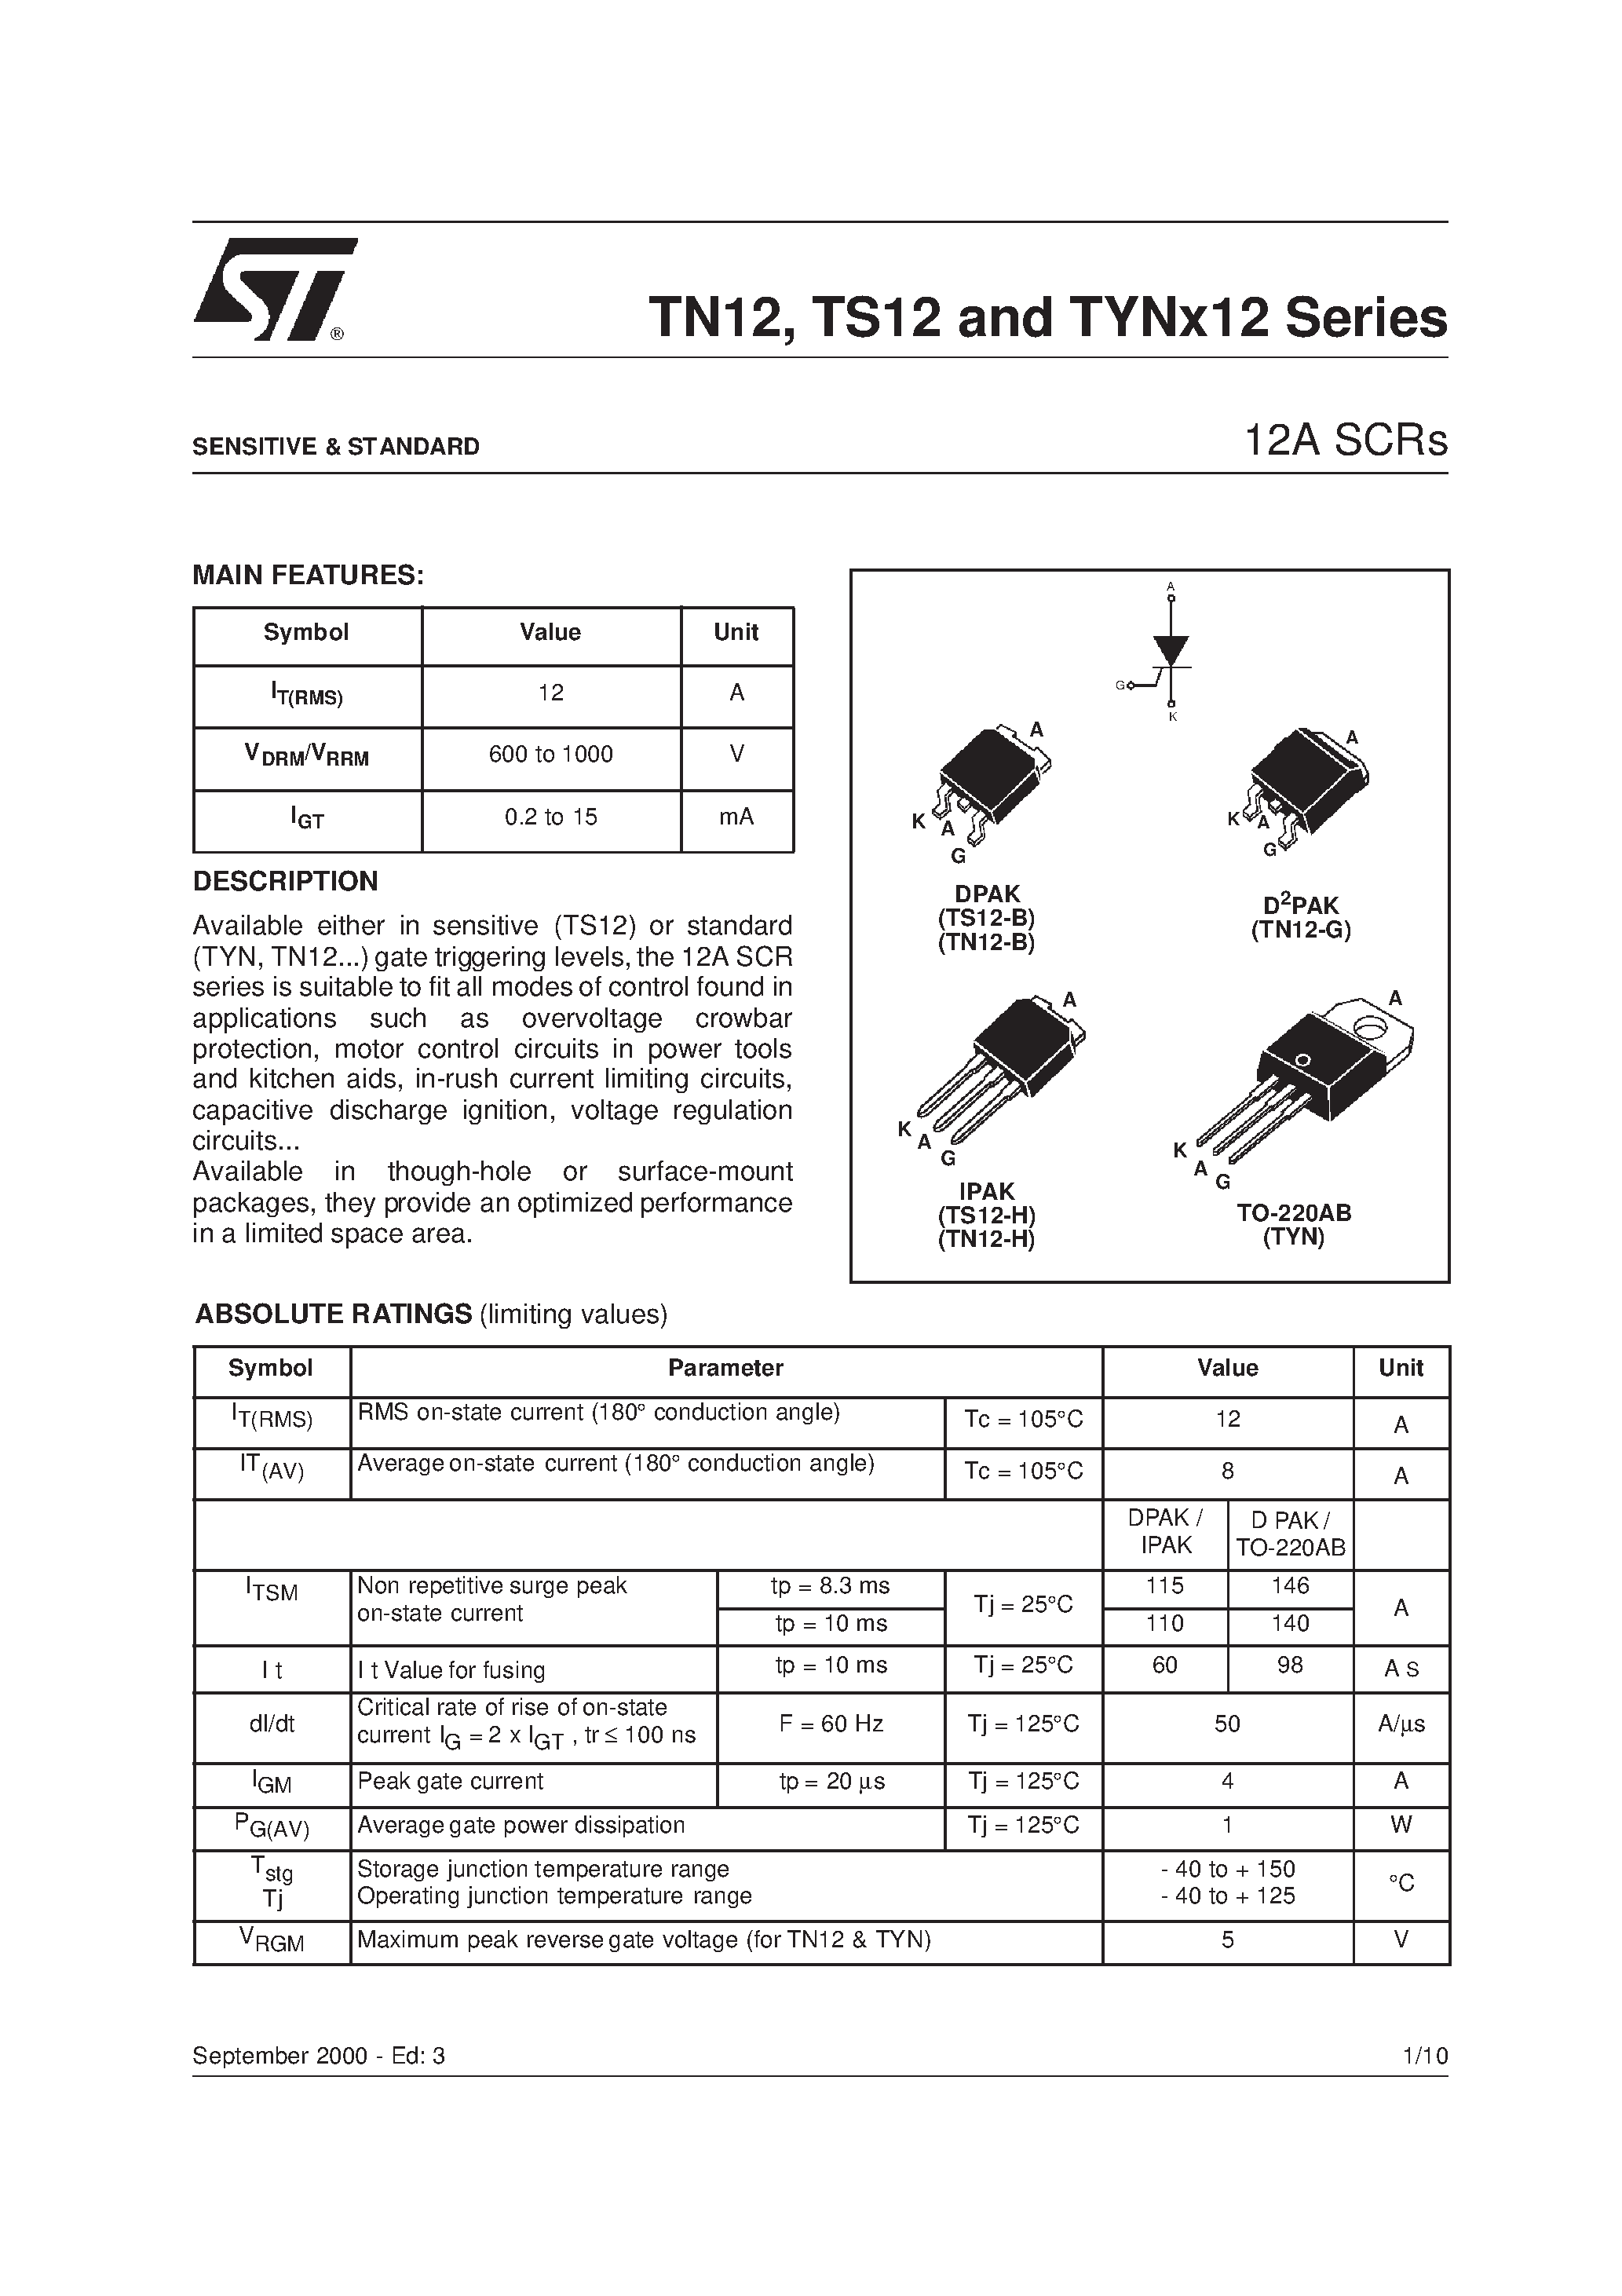 Datasheet TYN60012 - SENSITIVE & STANDARD(12A SCRs) page 1